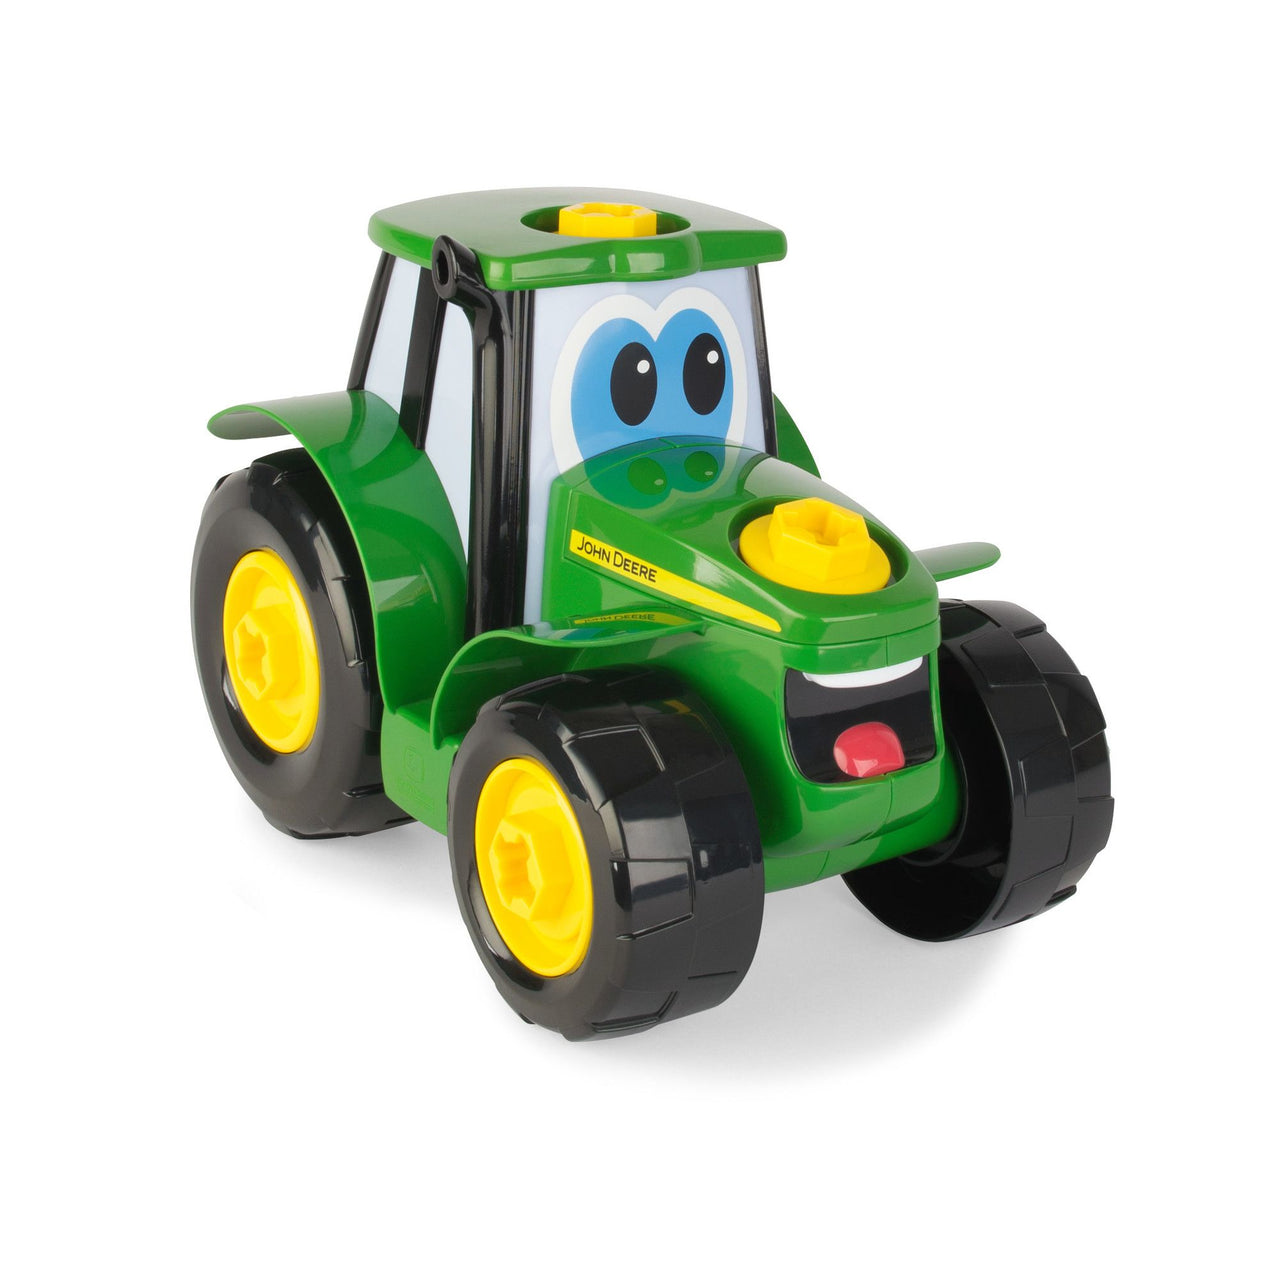 JOHN DEERE - Build a Johnny Tractor